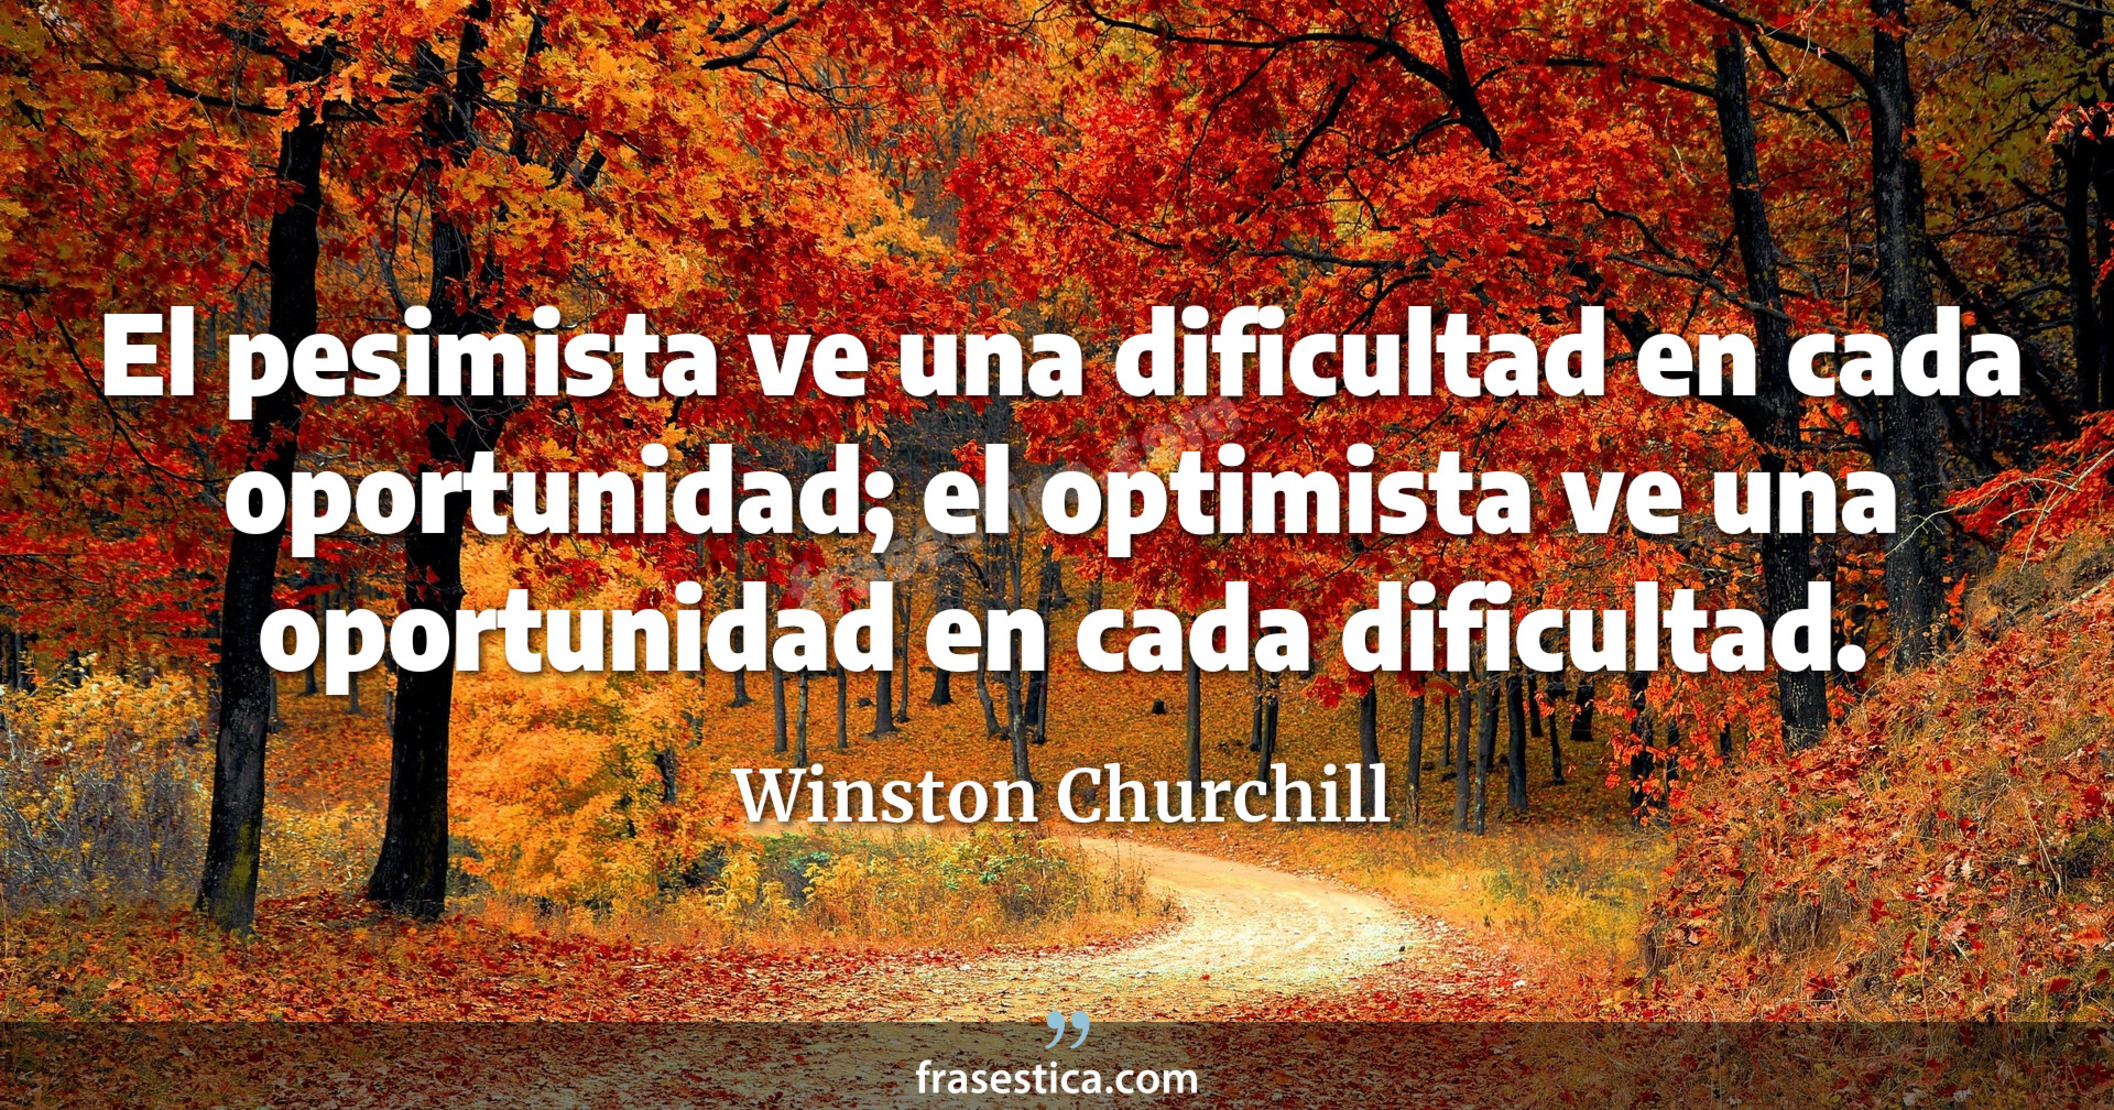 El pesimista ve una dificultad en cada oportunidad; el optimista ve una oportunidad en cada dificultad. - Winston Churchill